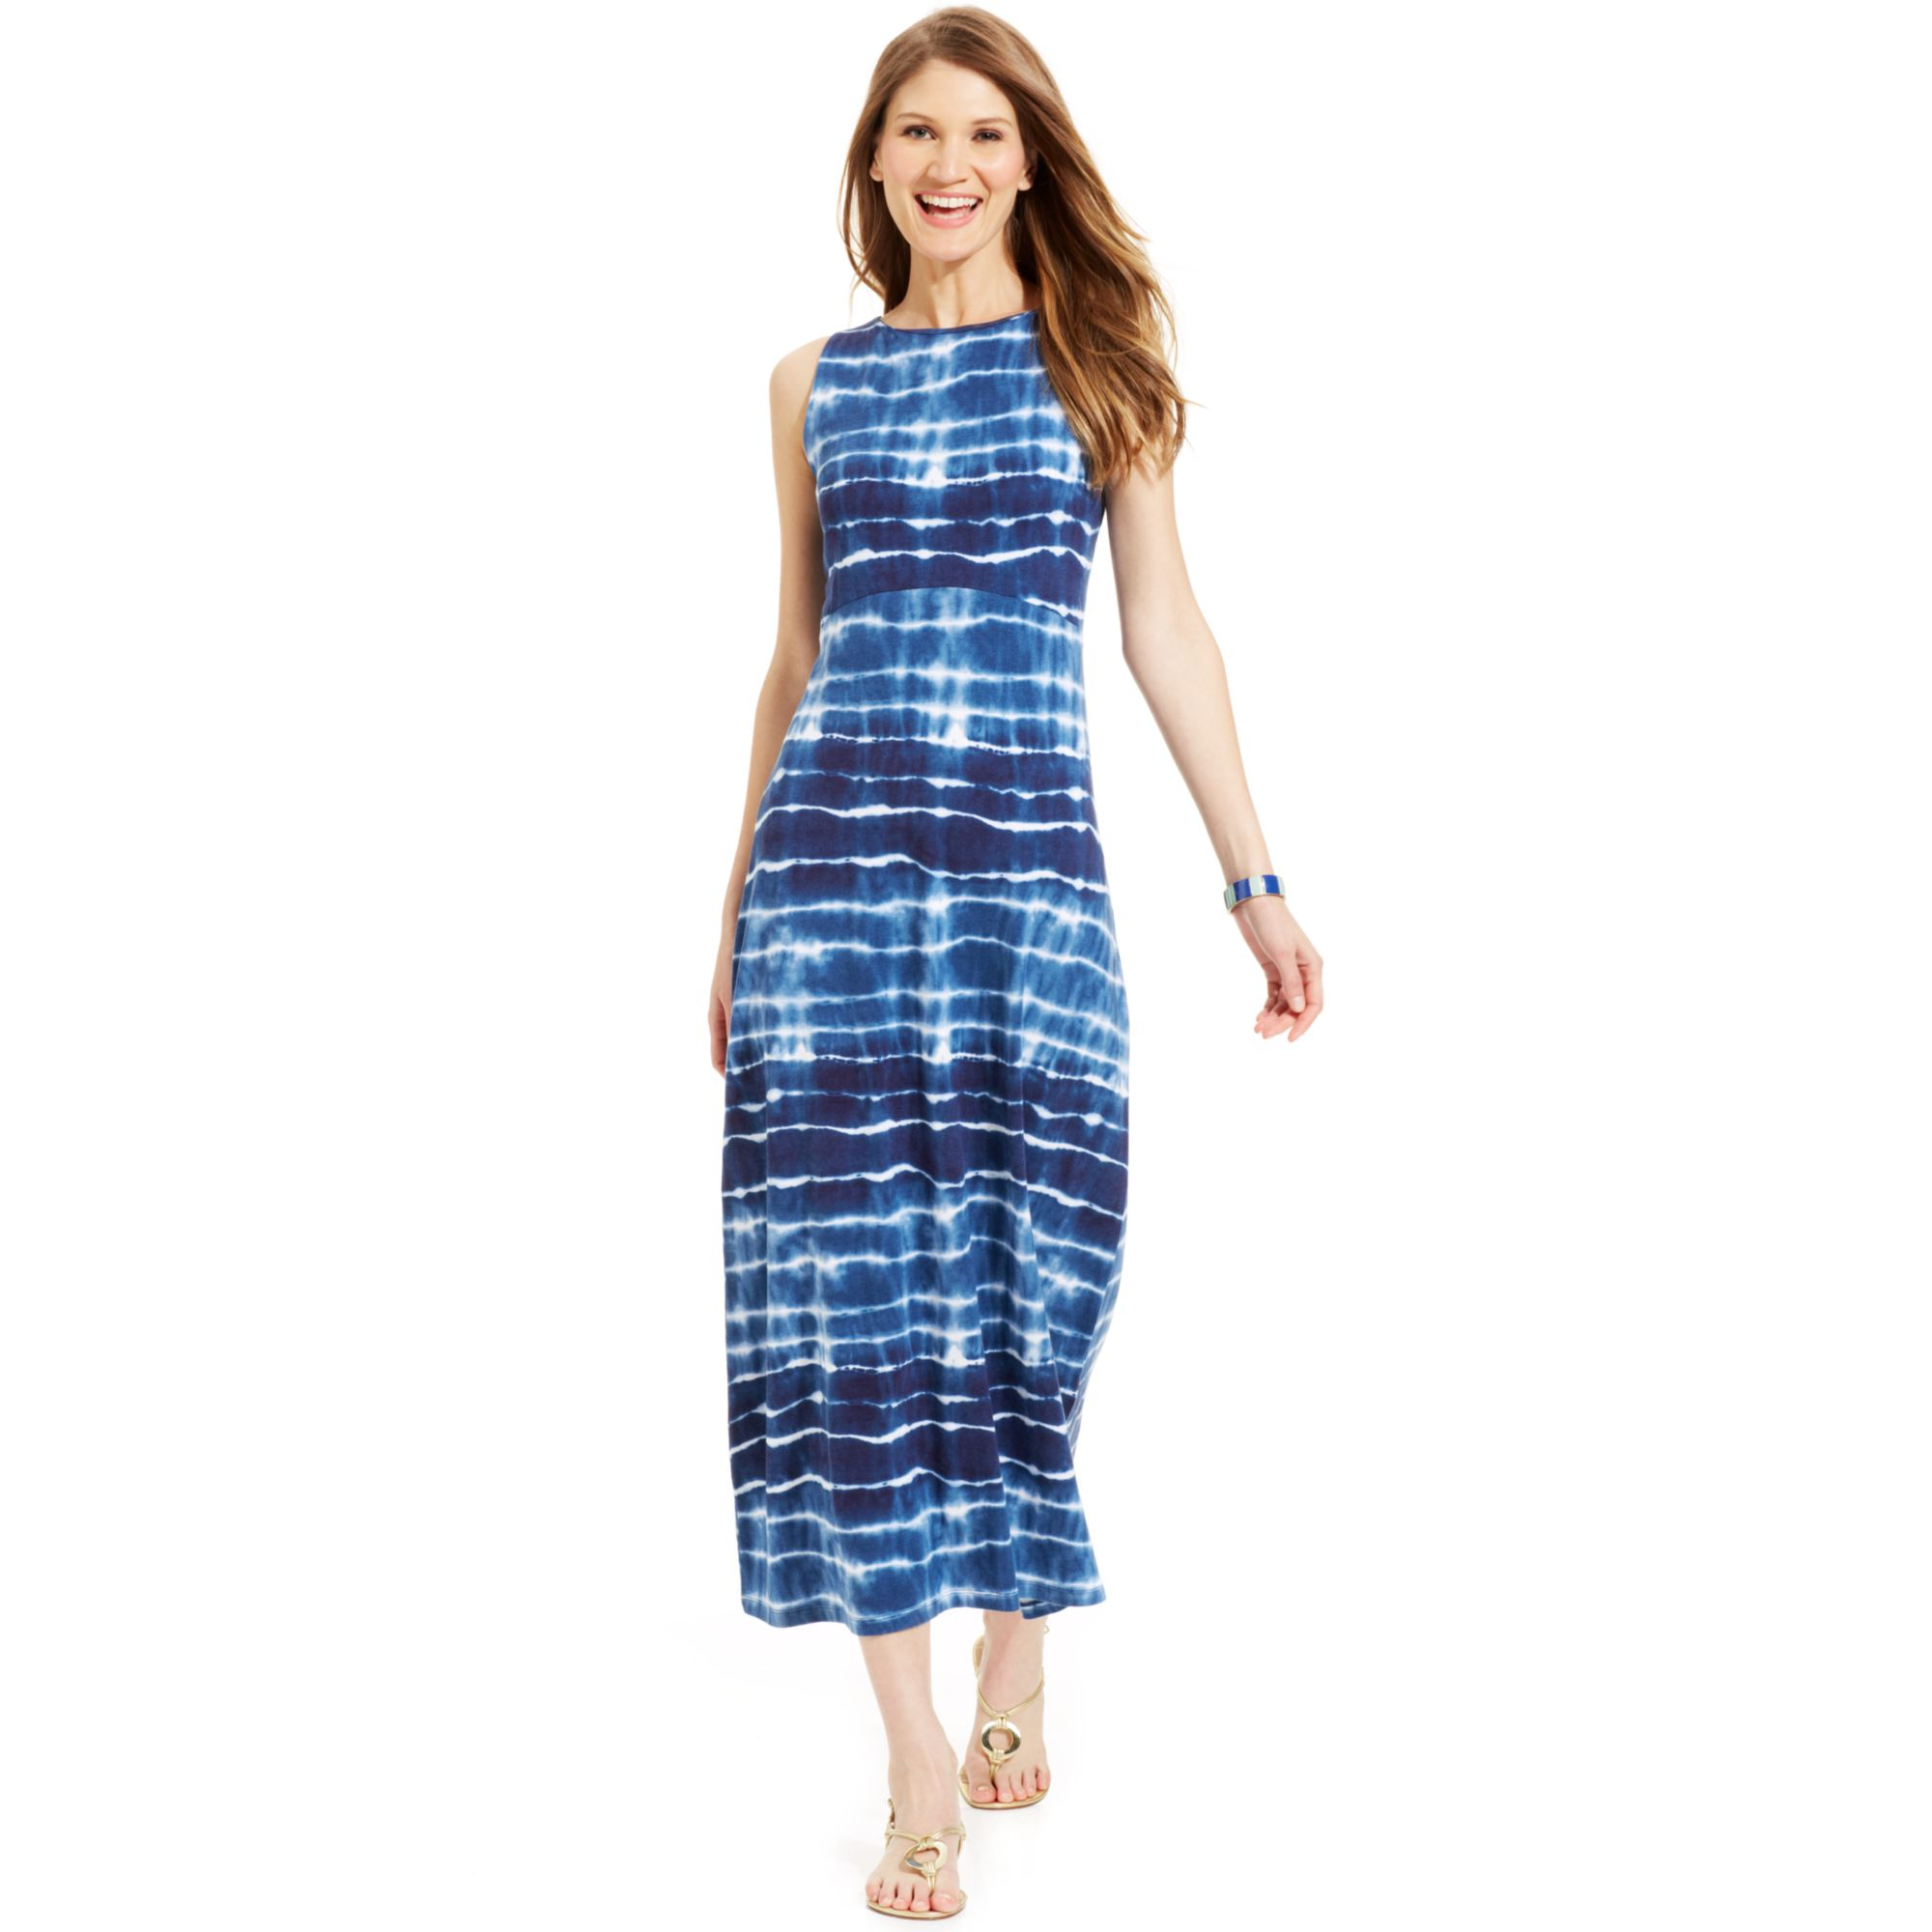 Lyst - Jones New York Sleeveless Seamed Tiedye Maxi Dress in Blue